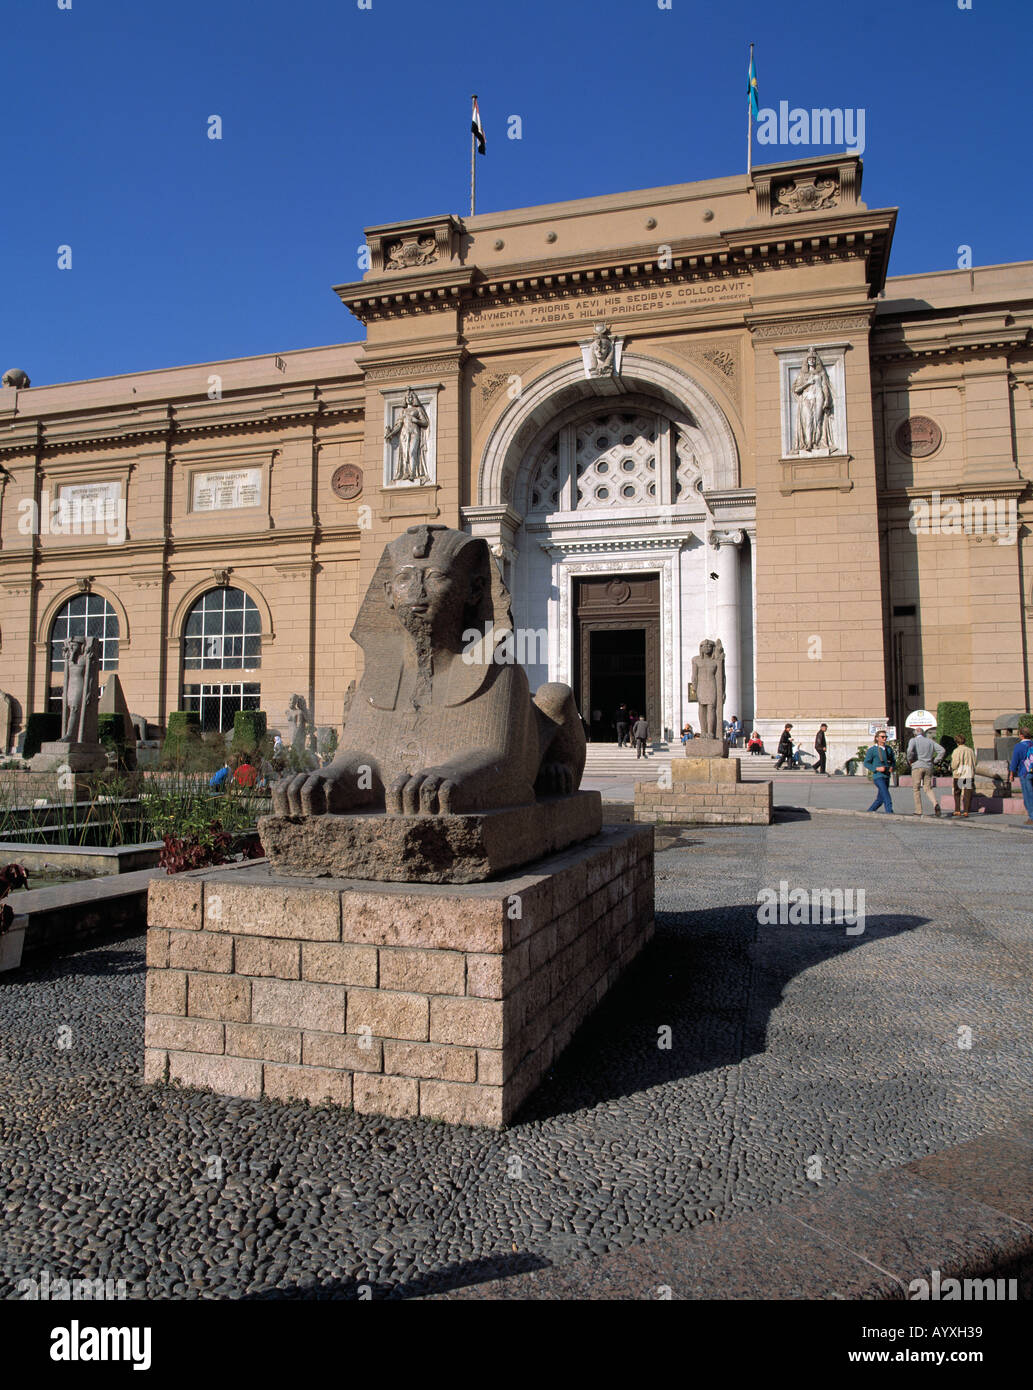 Eingang Aegyptisches Museum, Sphinx, statue, Skulptur, Kairo, Unteraegypten Banque D'Images